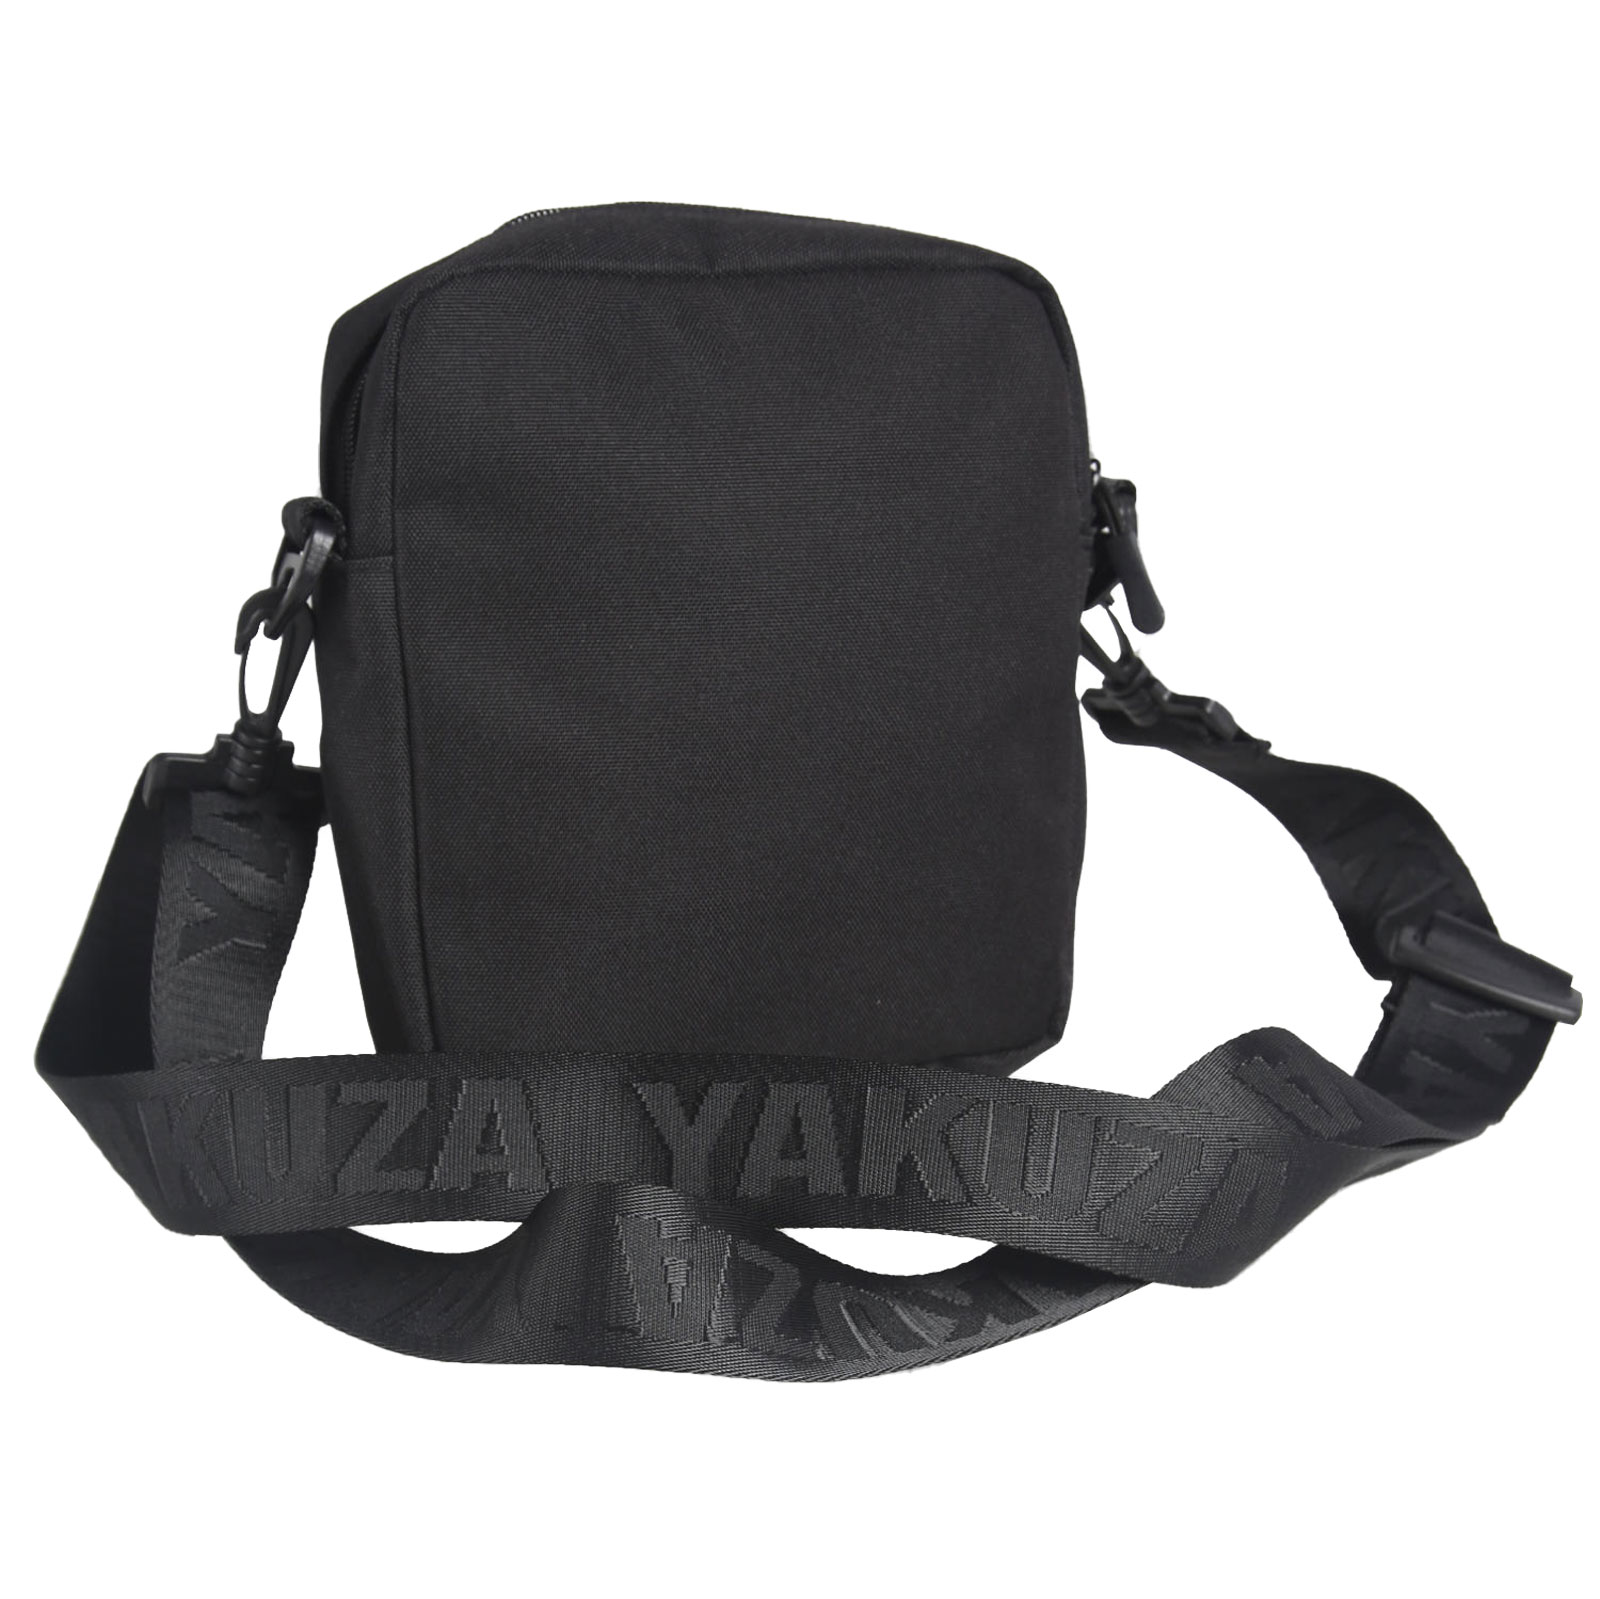 Yakuza Tab shoulder bag GTB-15304 with yakuza lettering